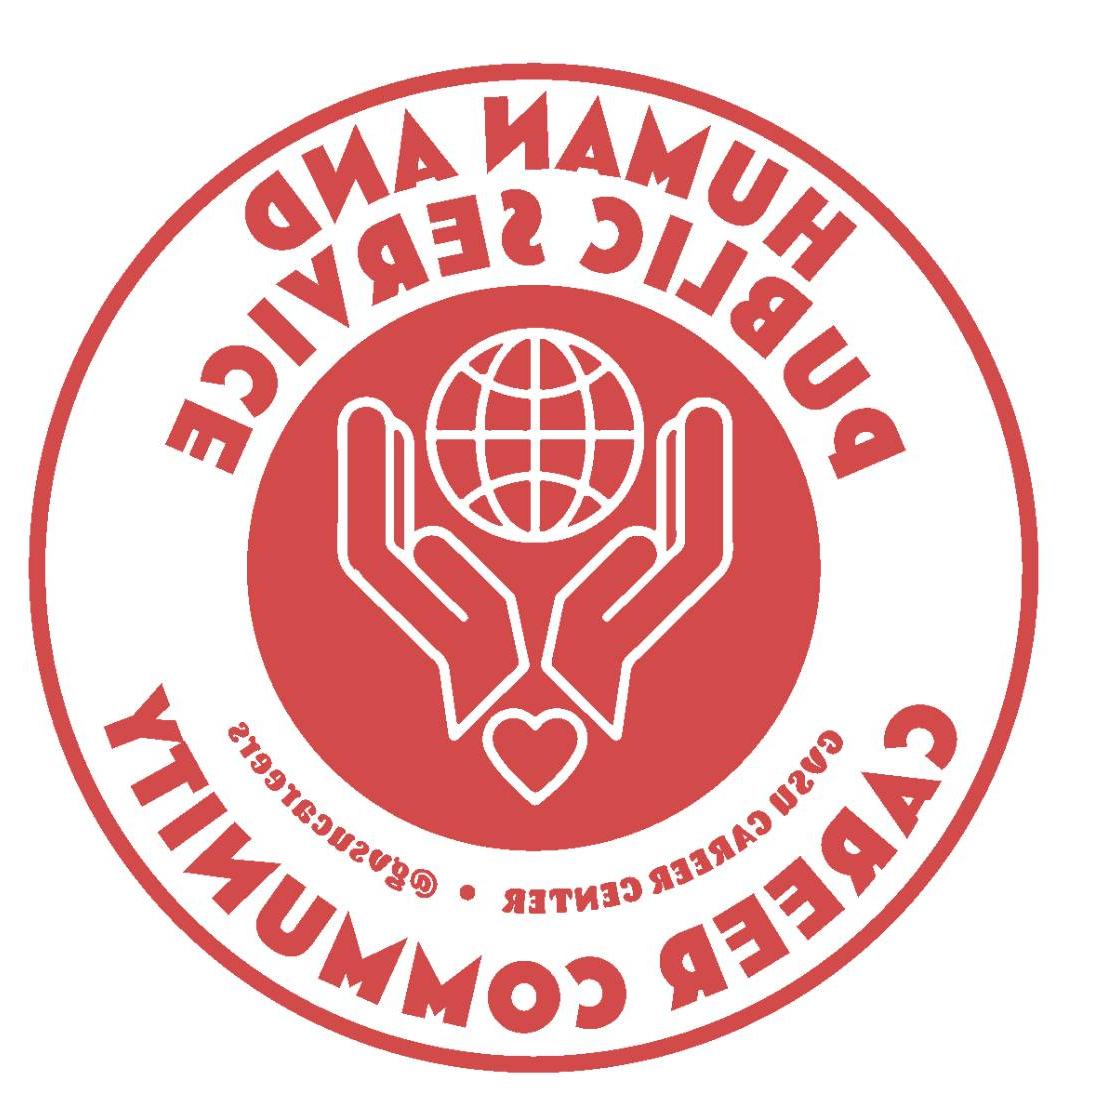 human and public service logo